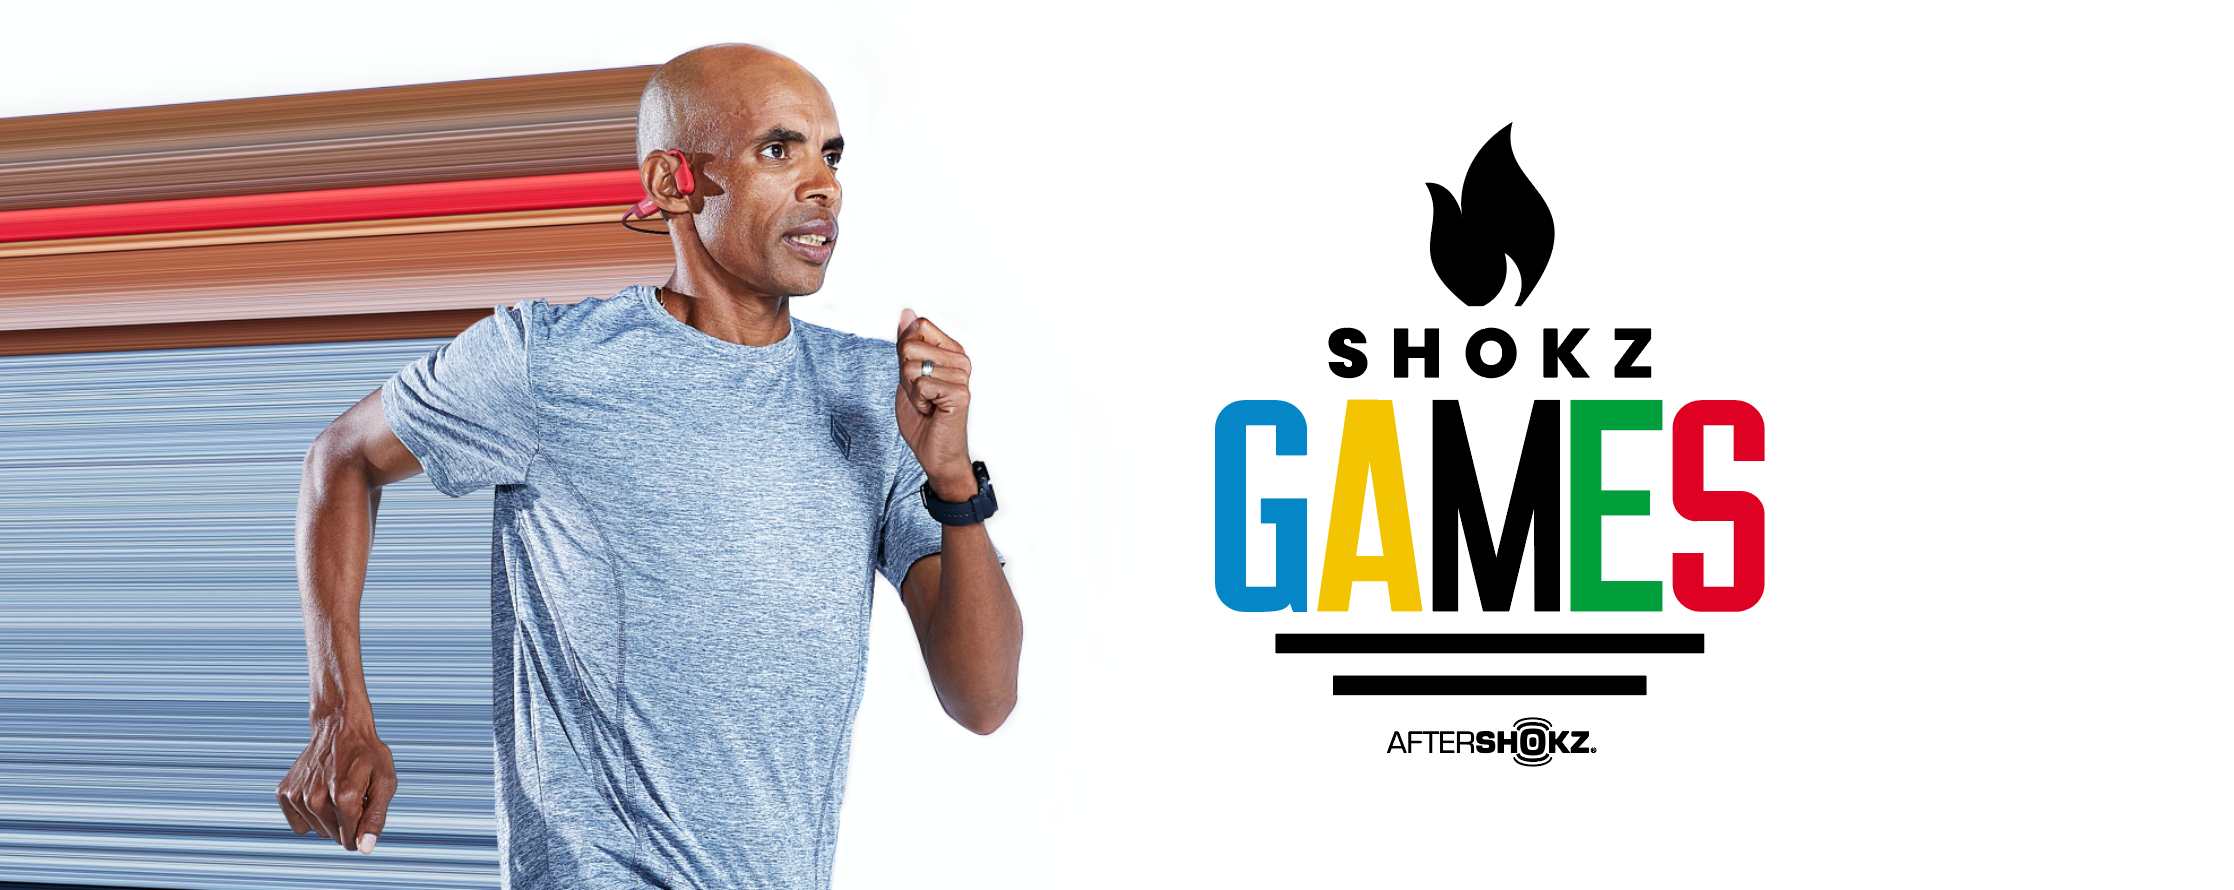 Introducing The Shokz Games